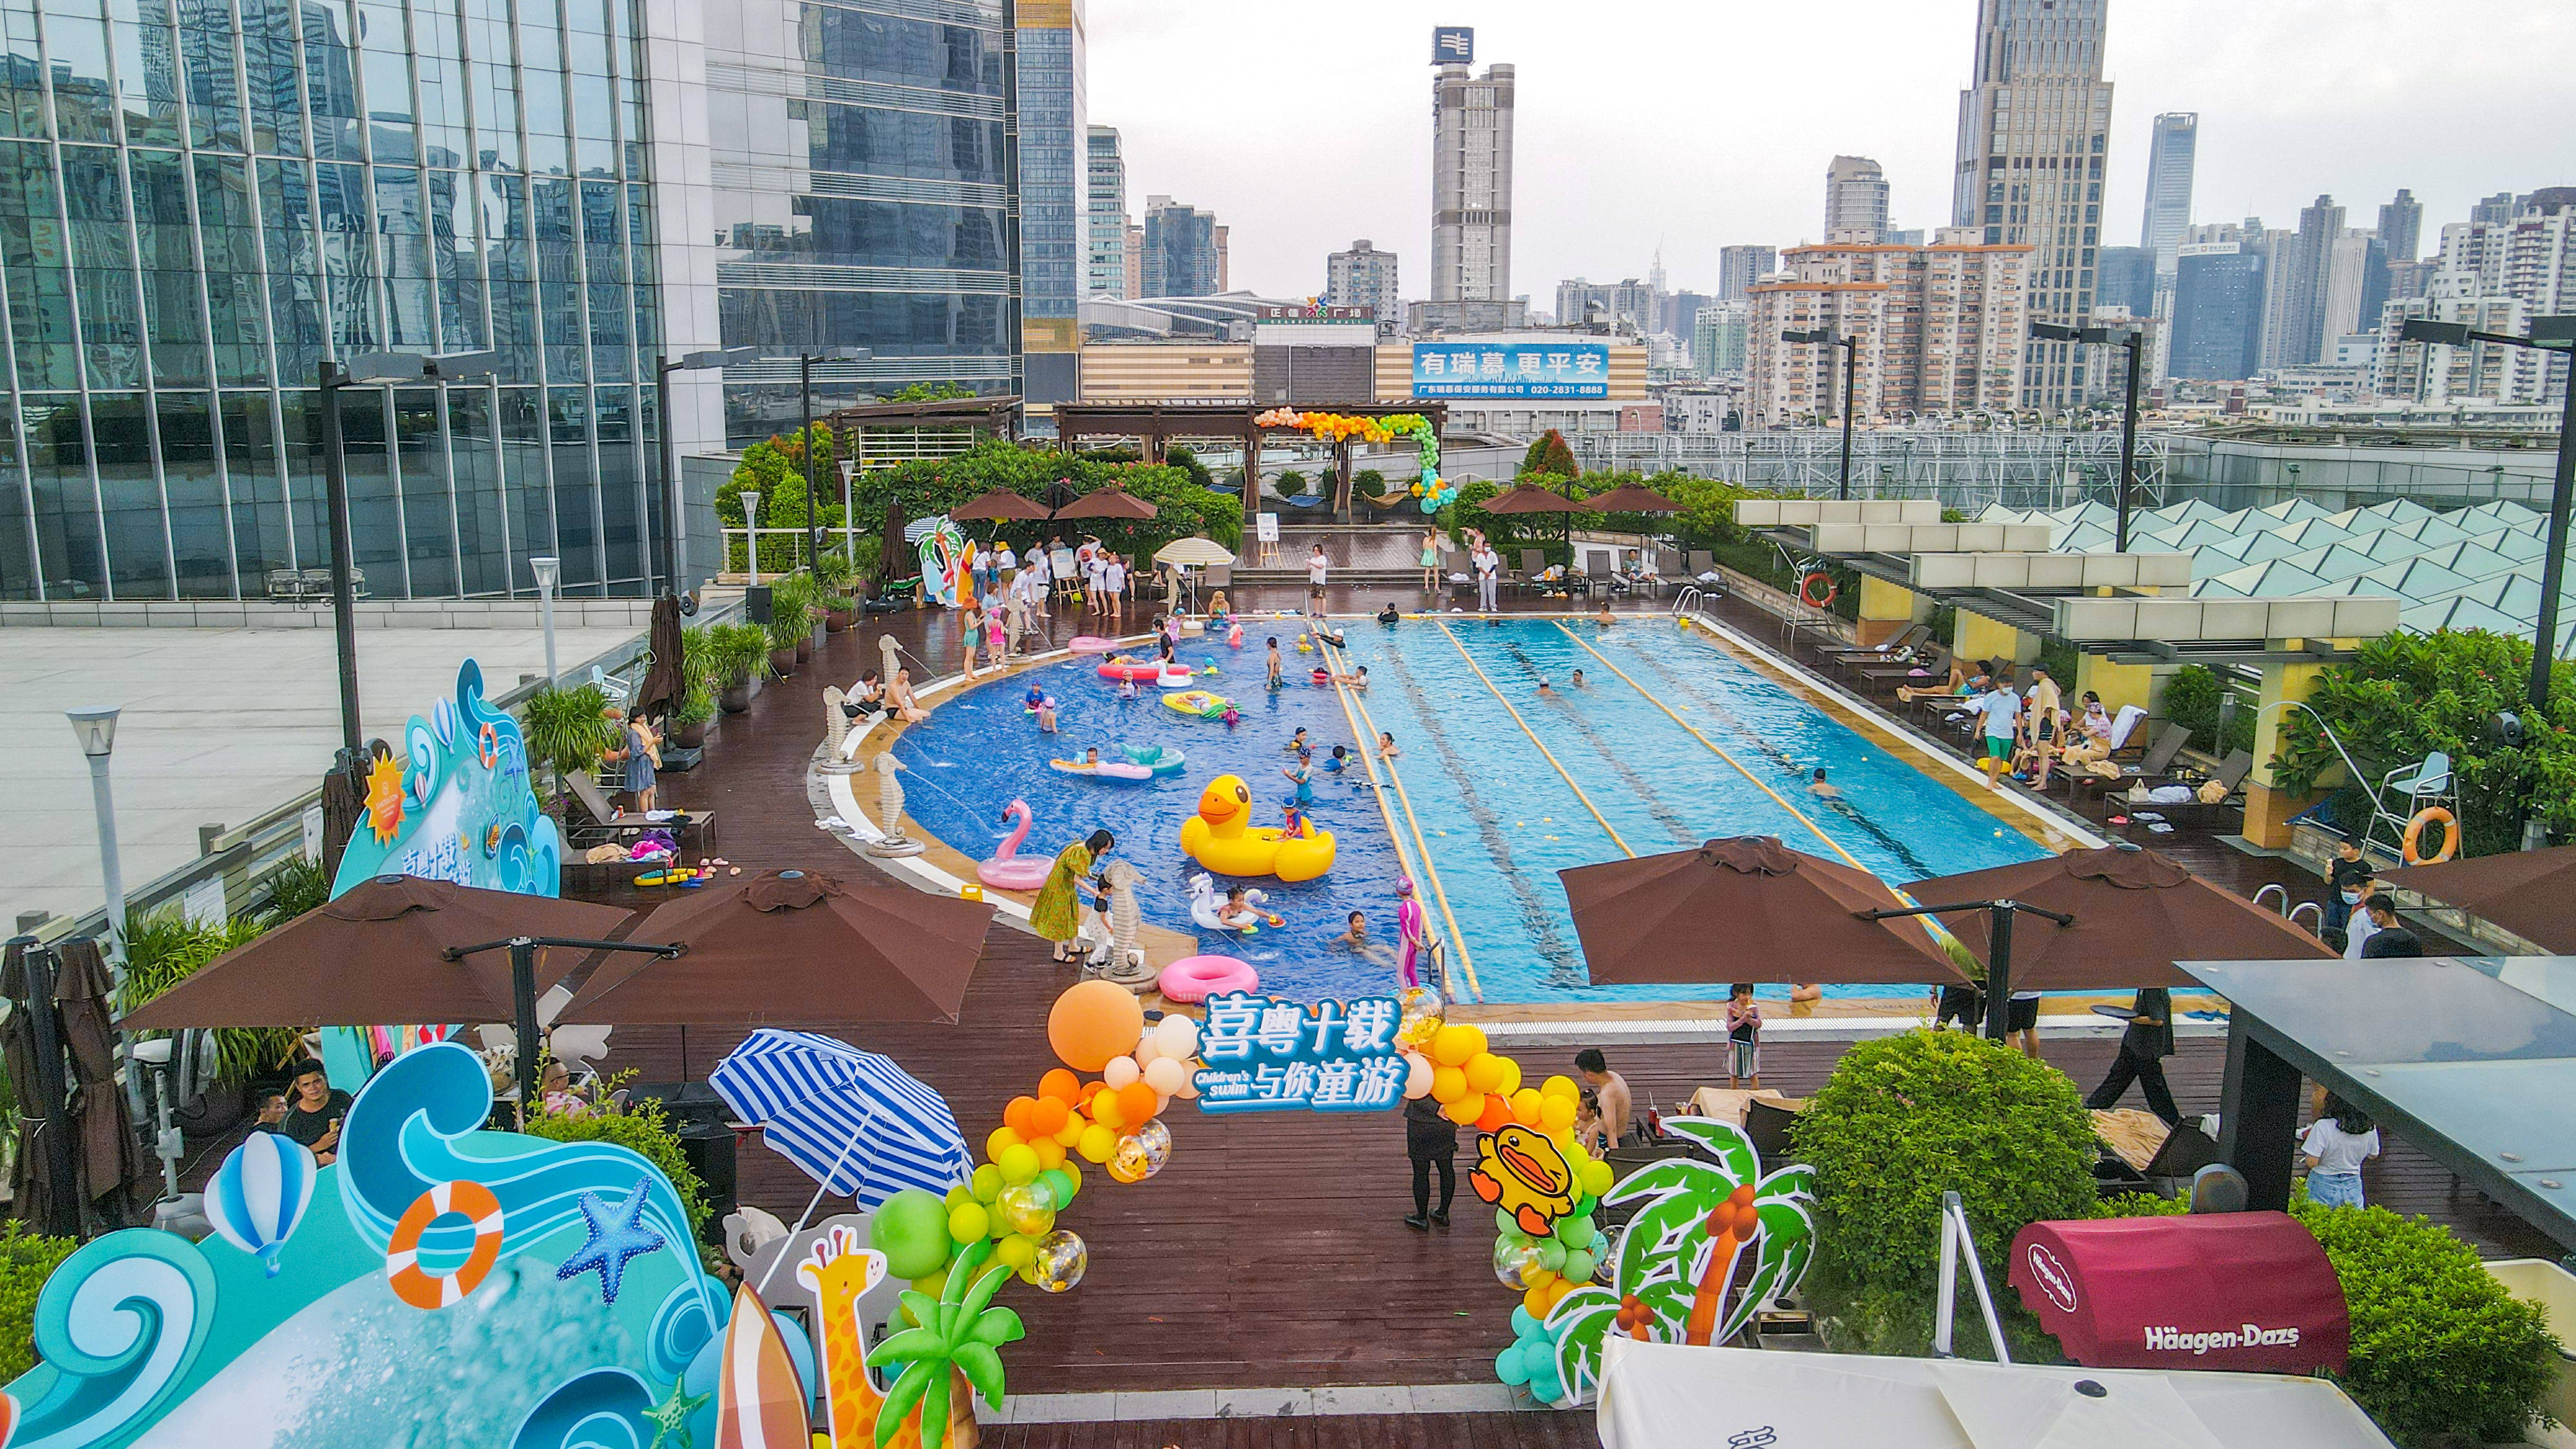 SOL阳光泳池派对全国巡回（上海站） - 案例 - ONSITECLUB - 体验营销案例集锦